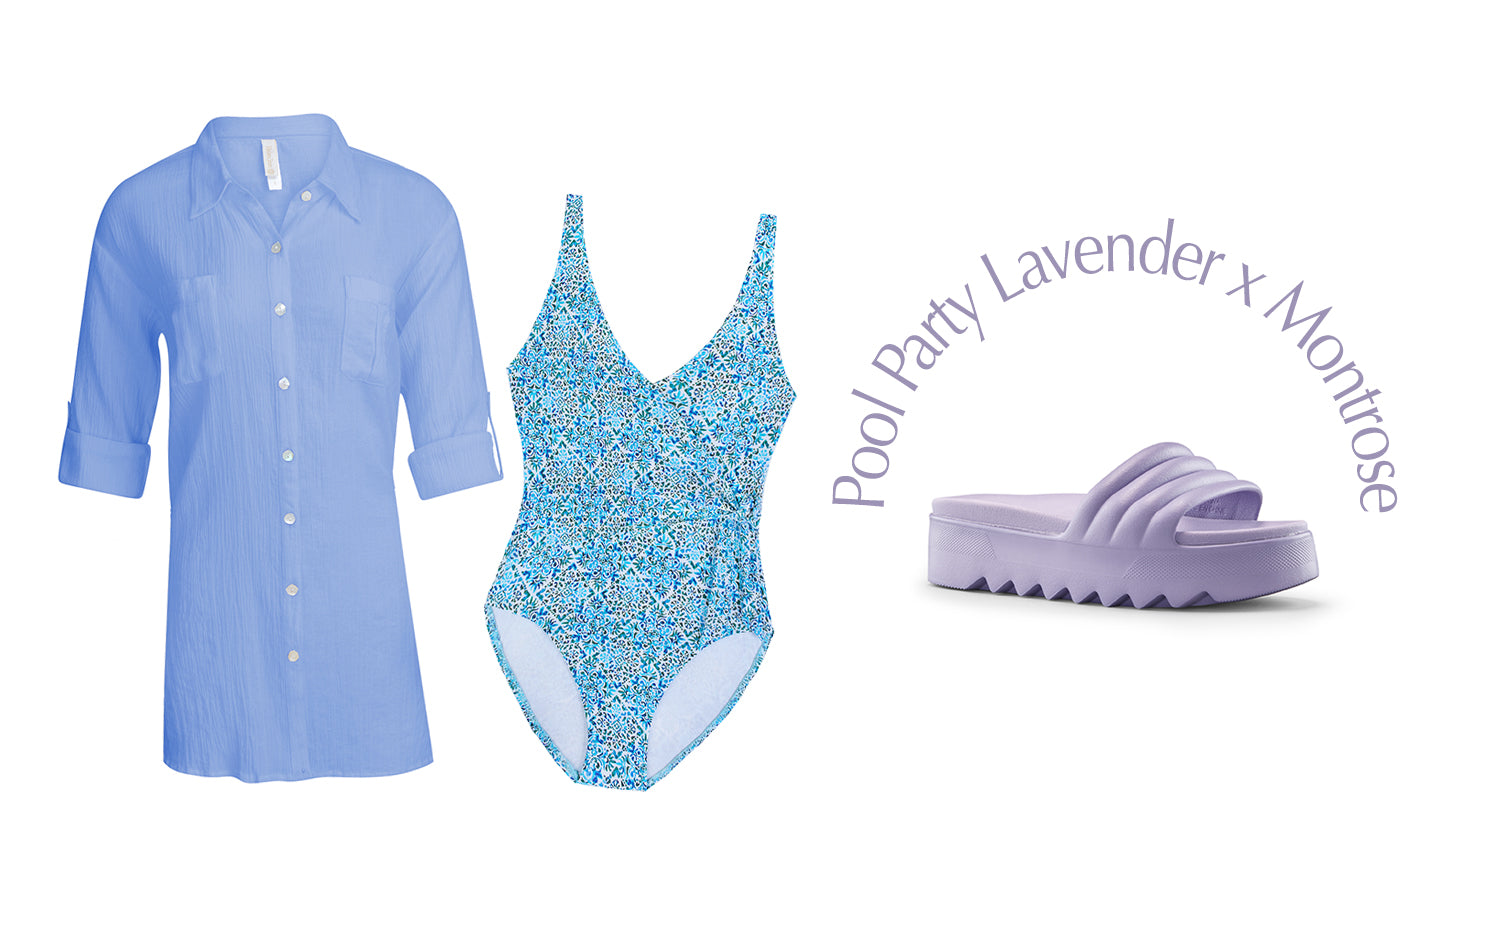 Cougar Pool Party Eva Lavender Slide Sandal Helen Jon Montrose Wrap One Piece and Blue Periwinkle Relxed Shirt Dress